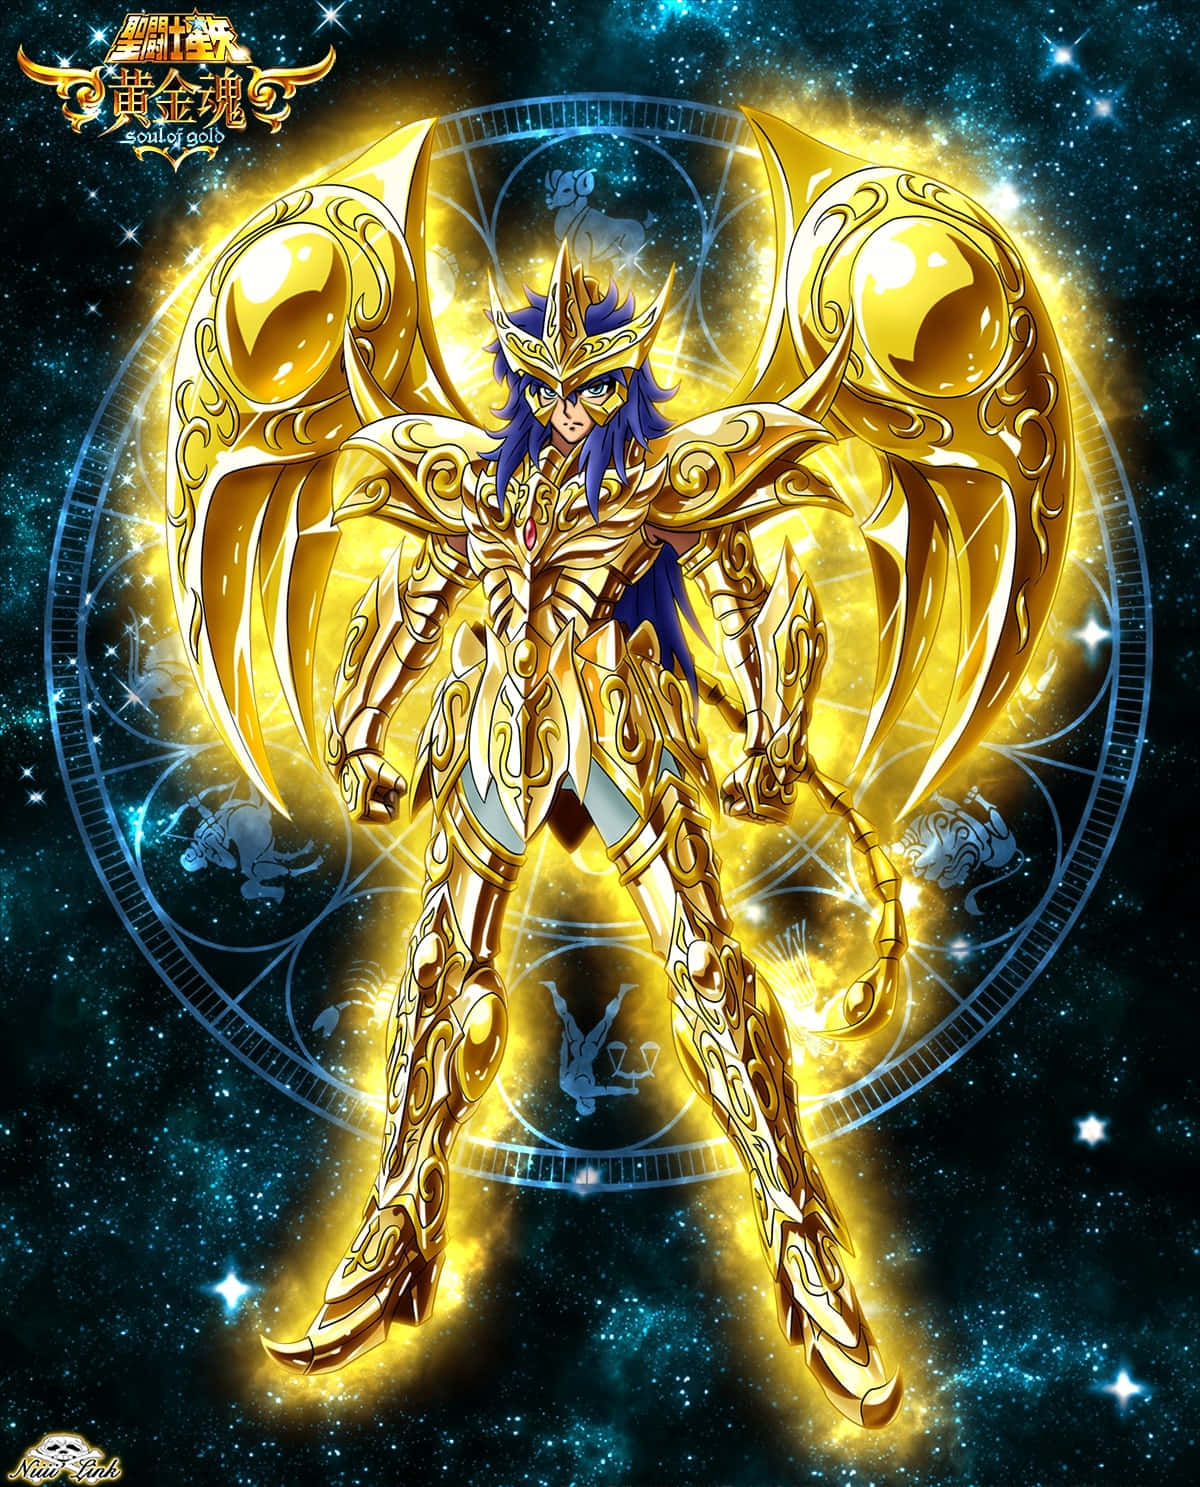 Impressive Image Of Scorpio Milo - The Brave Gold Saint Of The Scorpio Constellation In "saint Seiya". Wallpaper